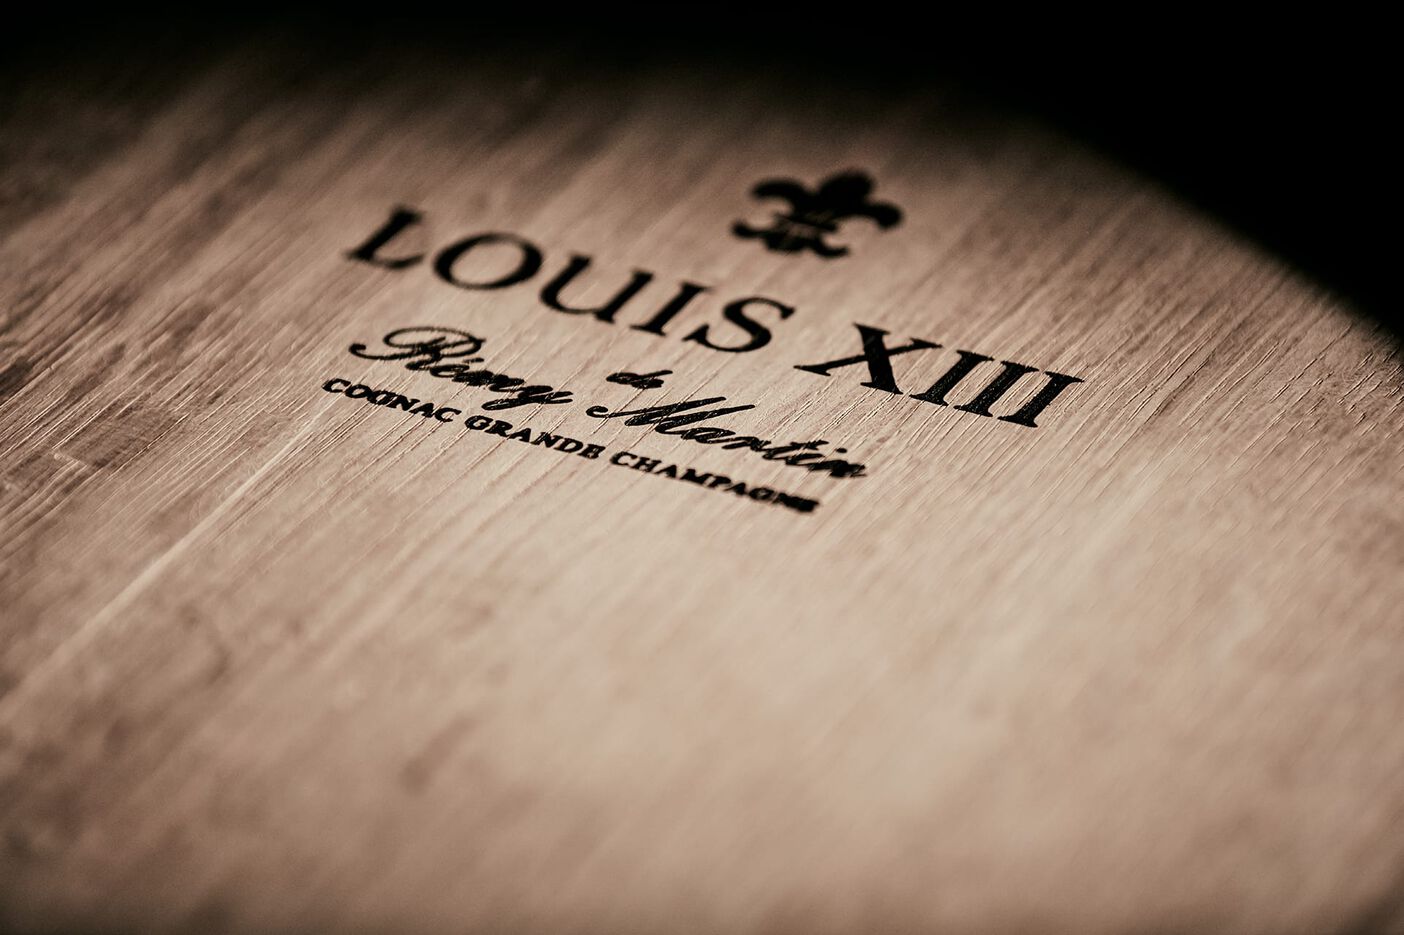 Buy Louis Xiii Online In India -  India